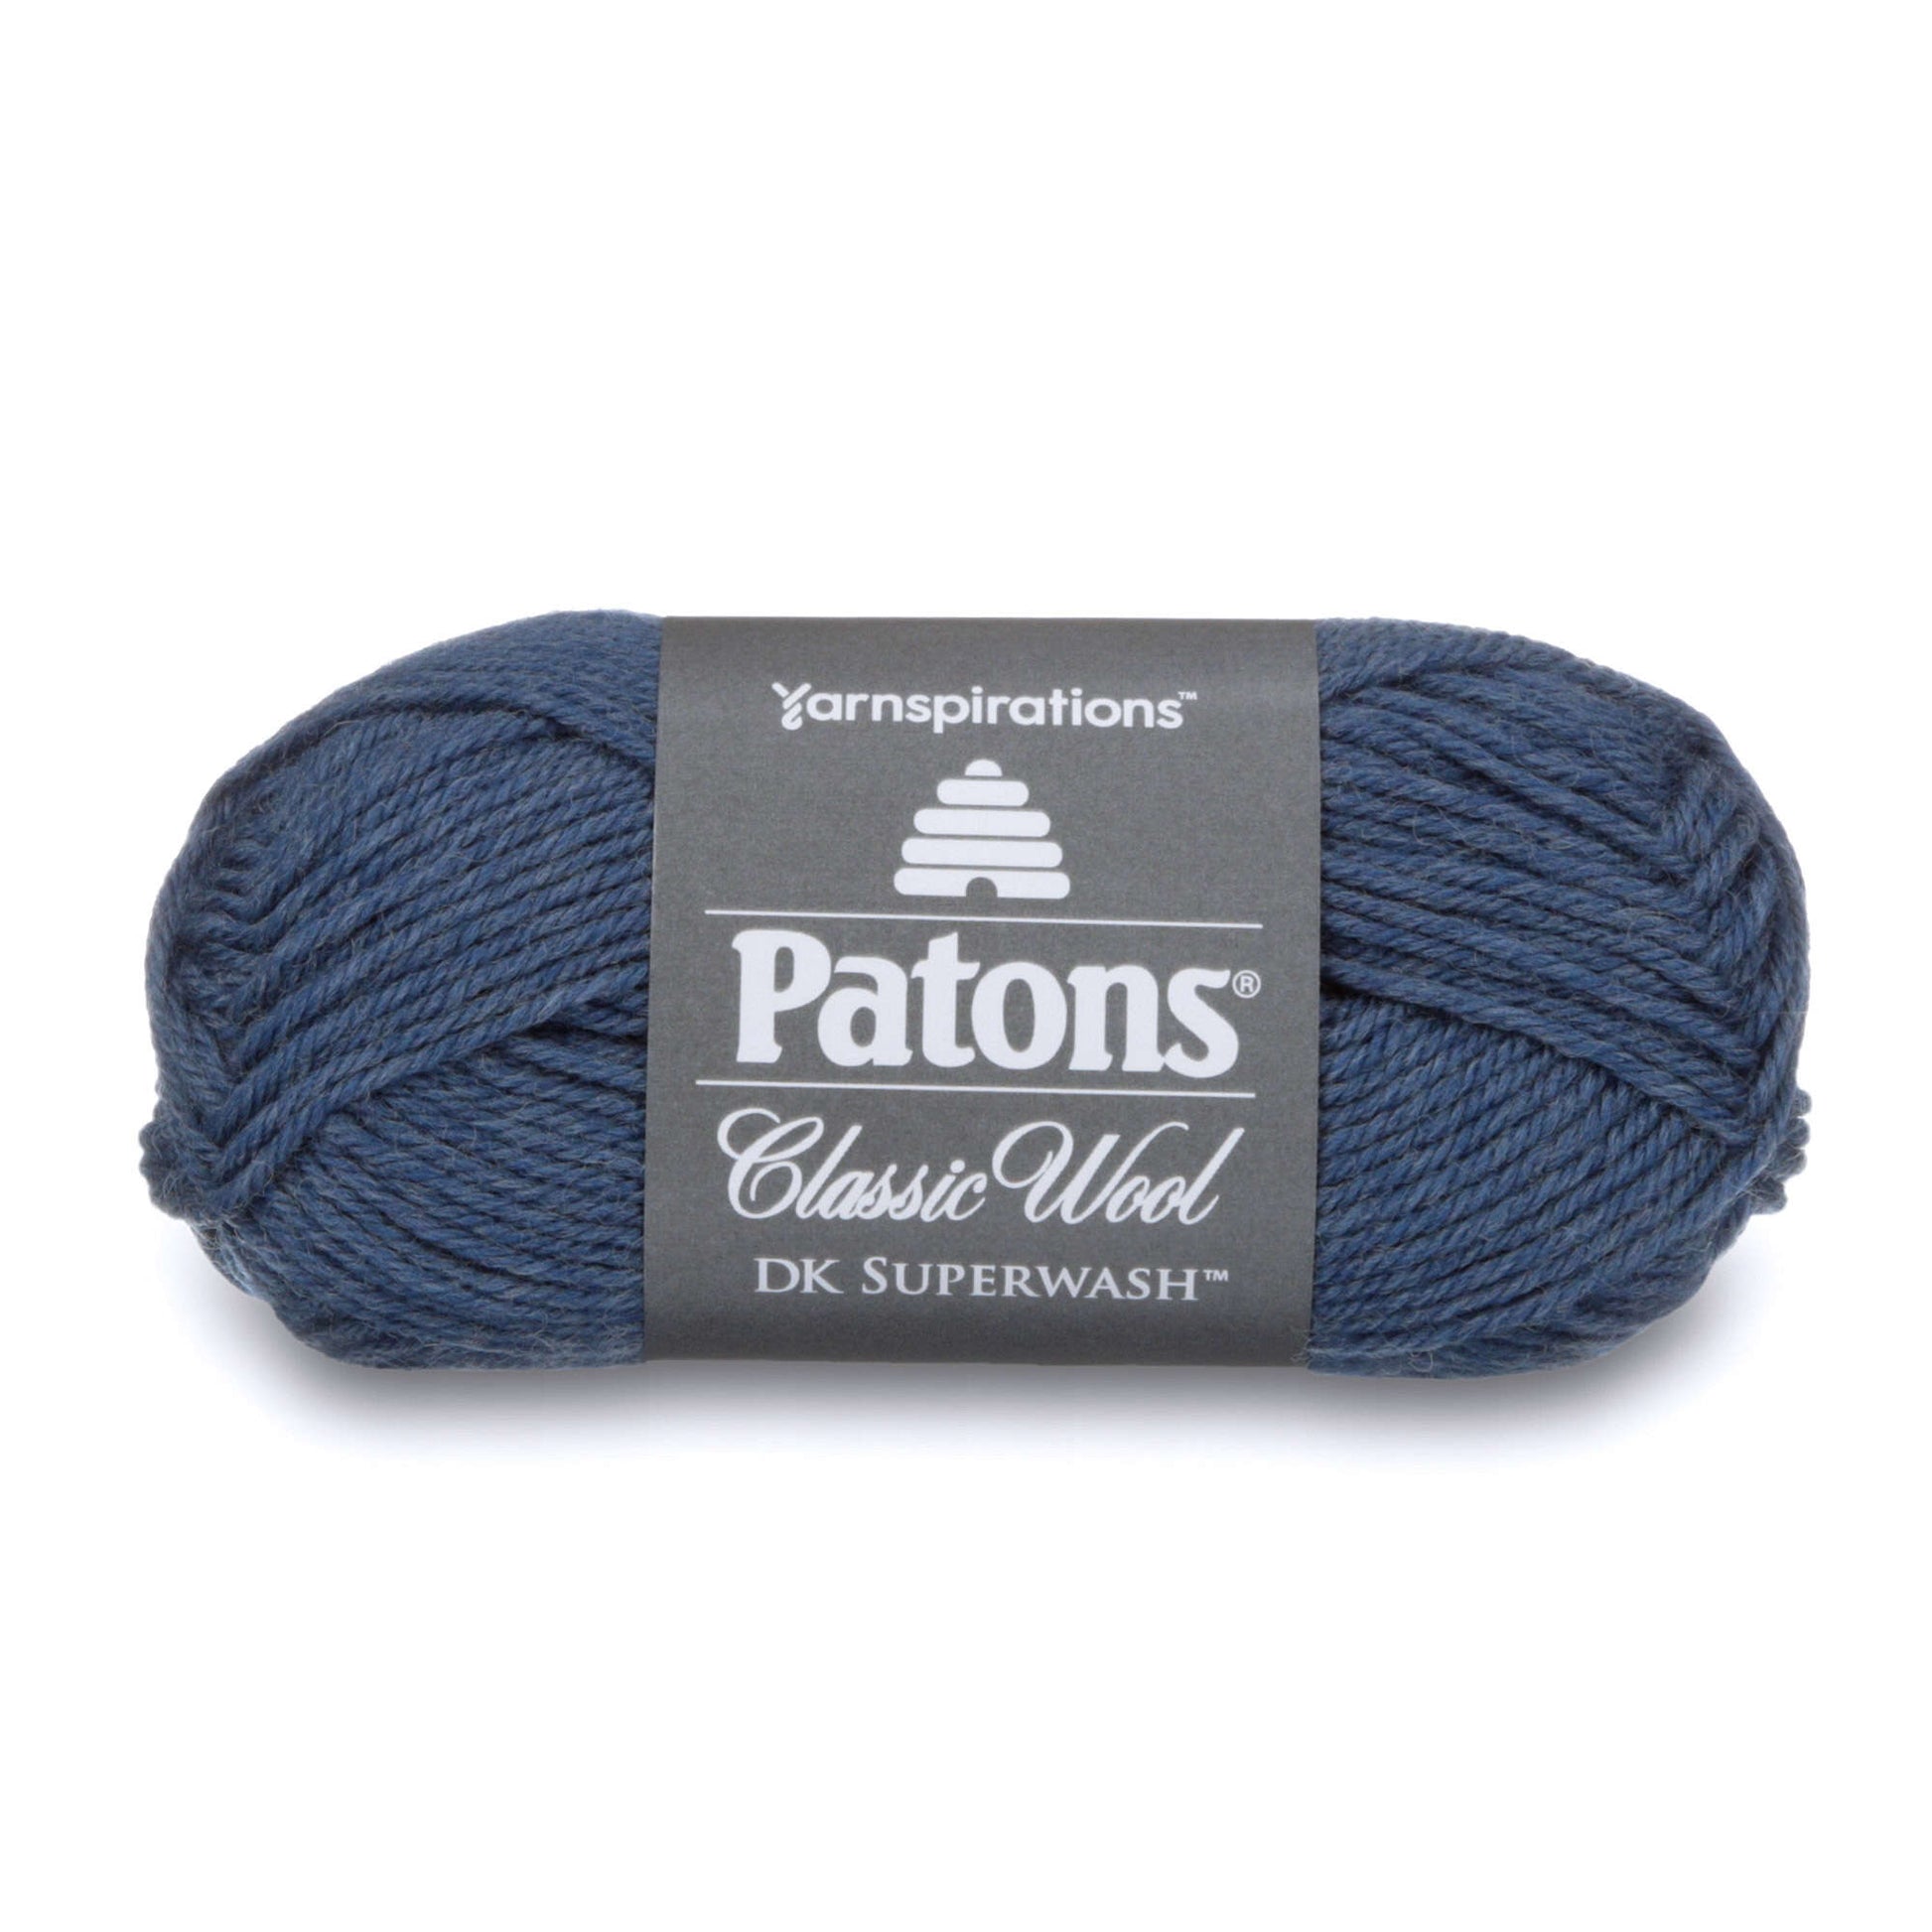 Patons Classic Wool DK Superwash Yarn - Discontinued Shades Denim Heather